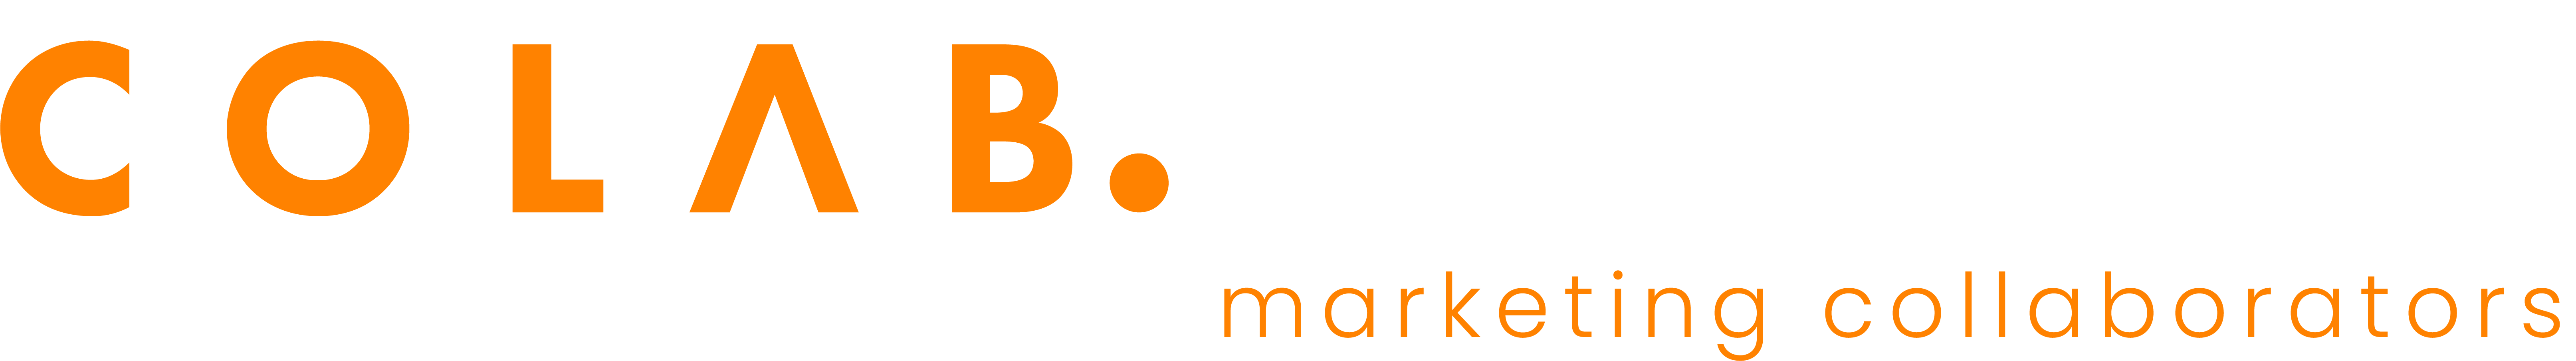 CC Logo HOR OL rev crop v2